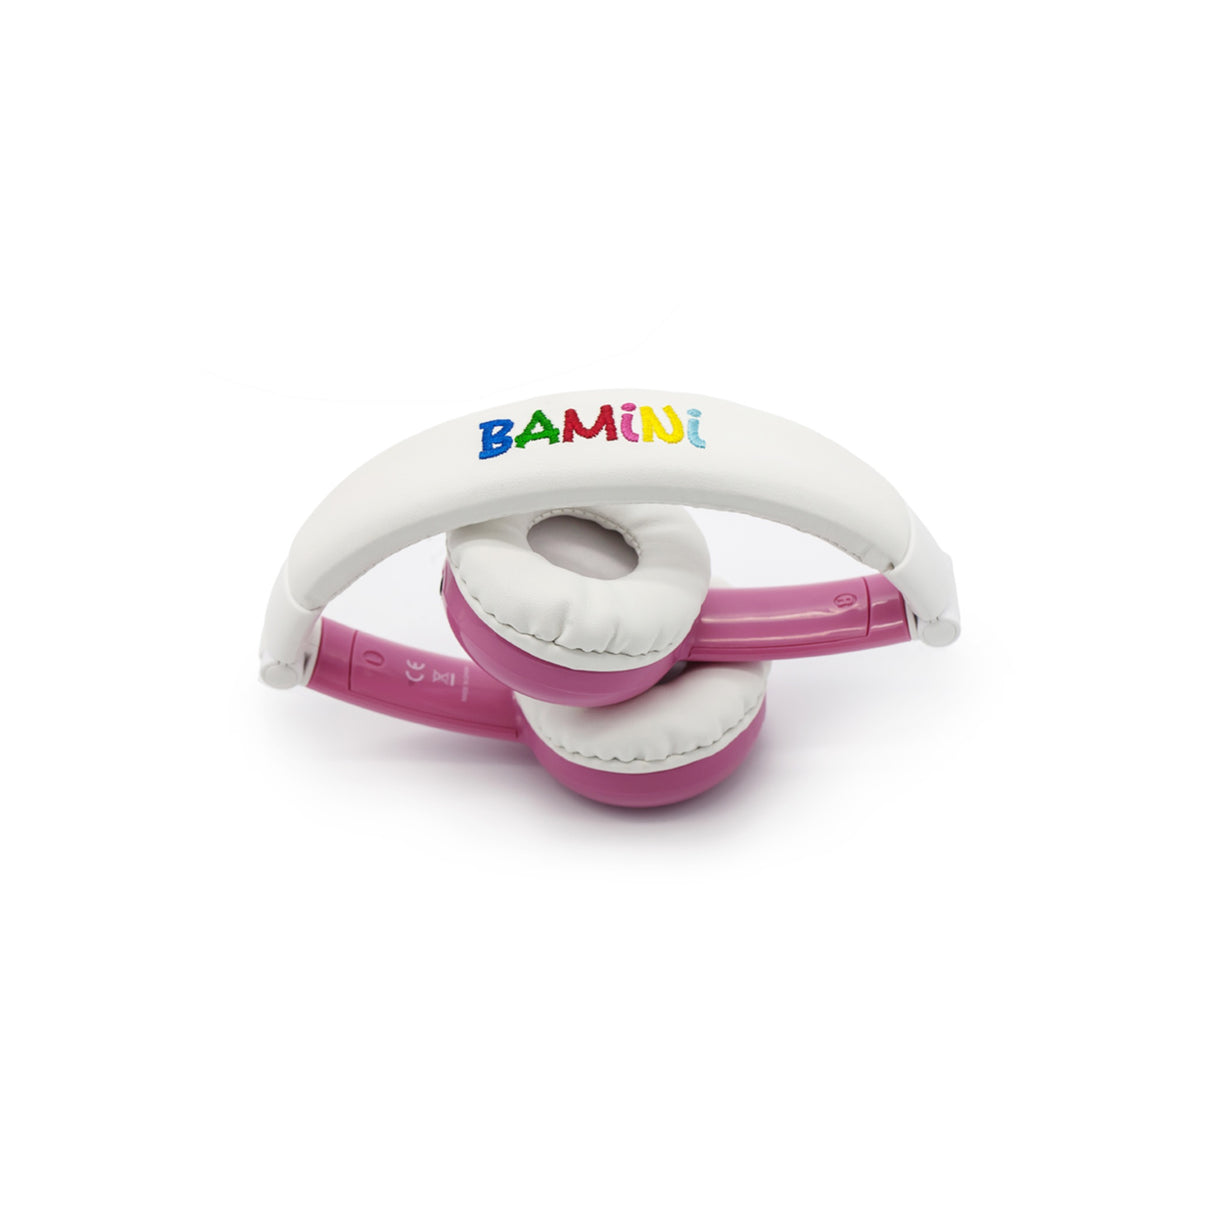 BAMiNi Healthy Foldable Wired Headphone